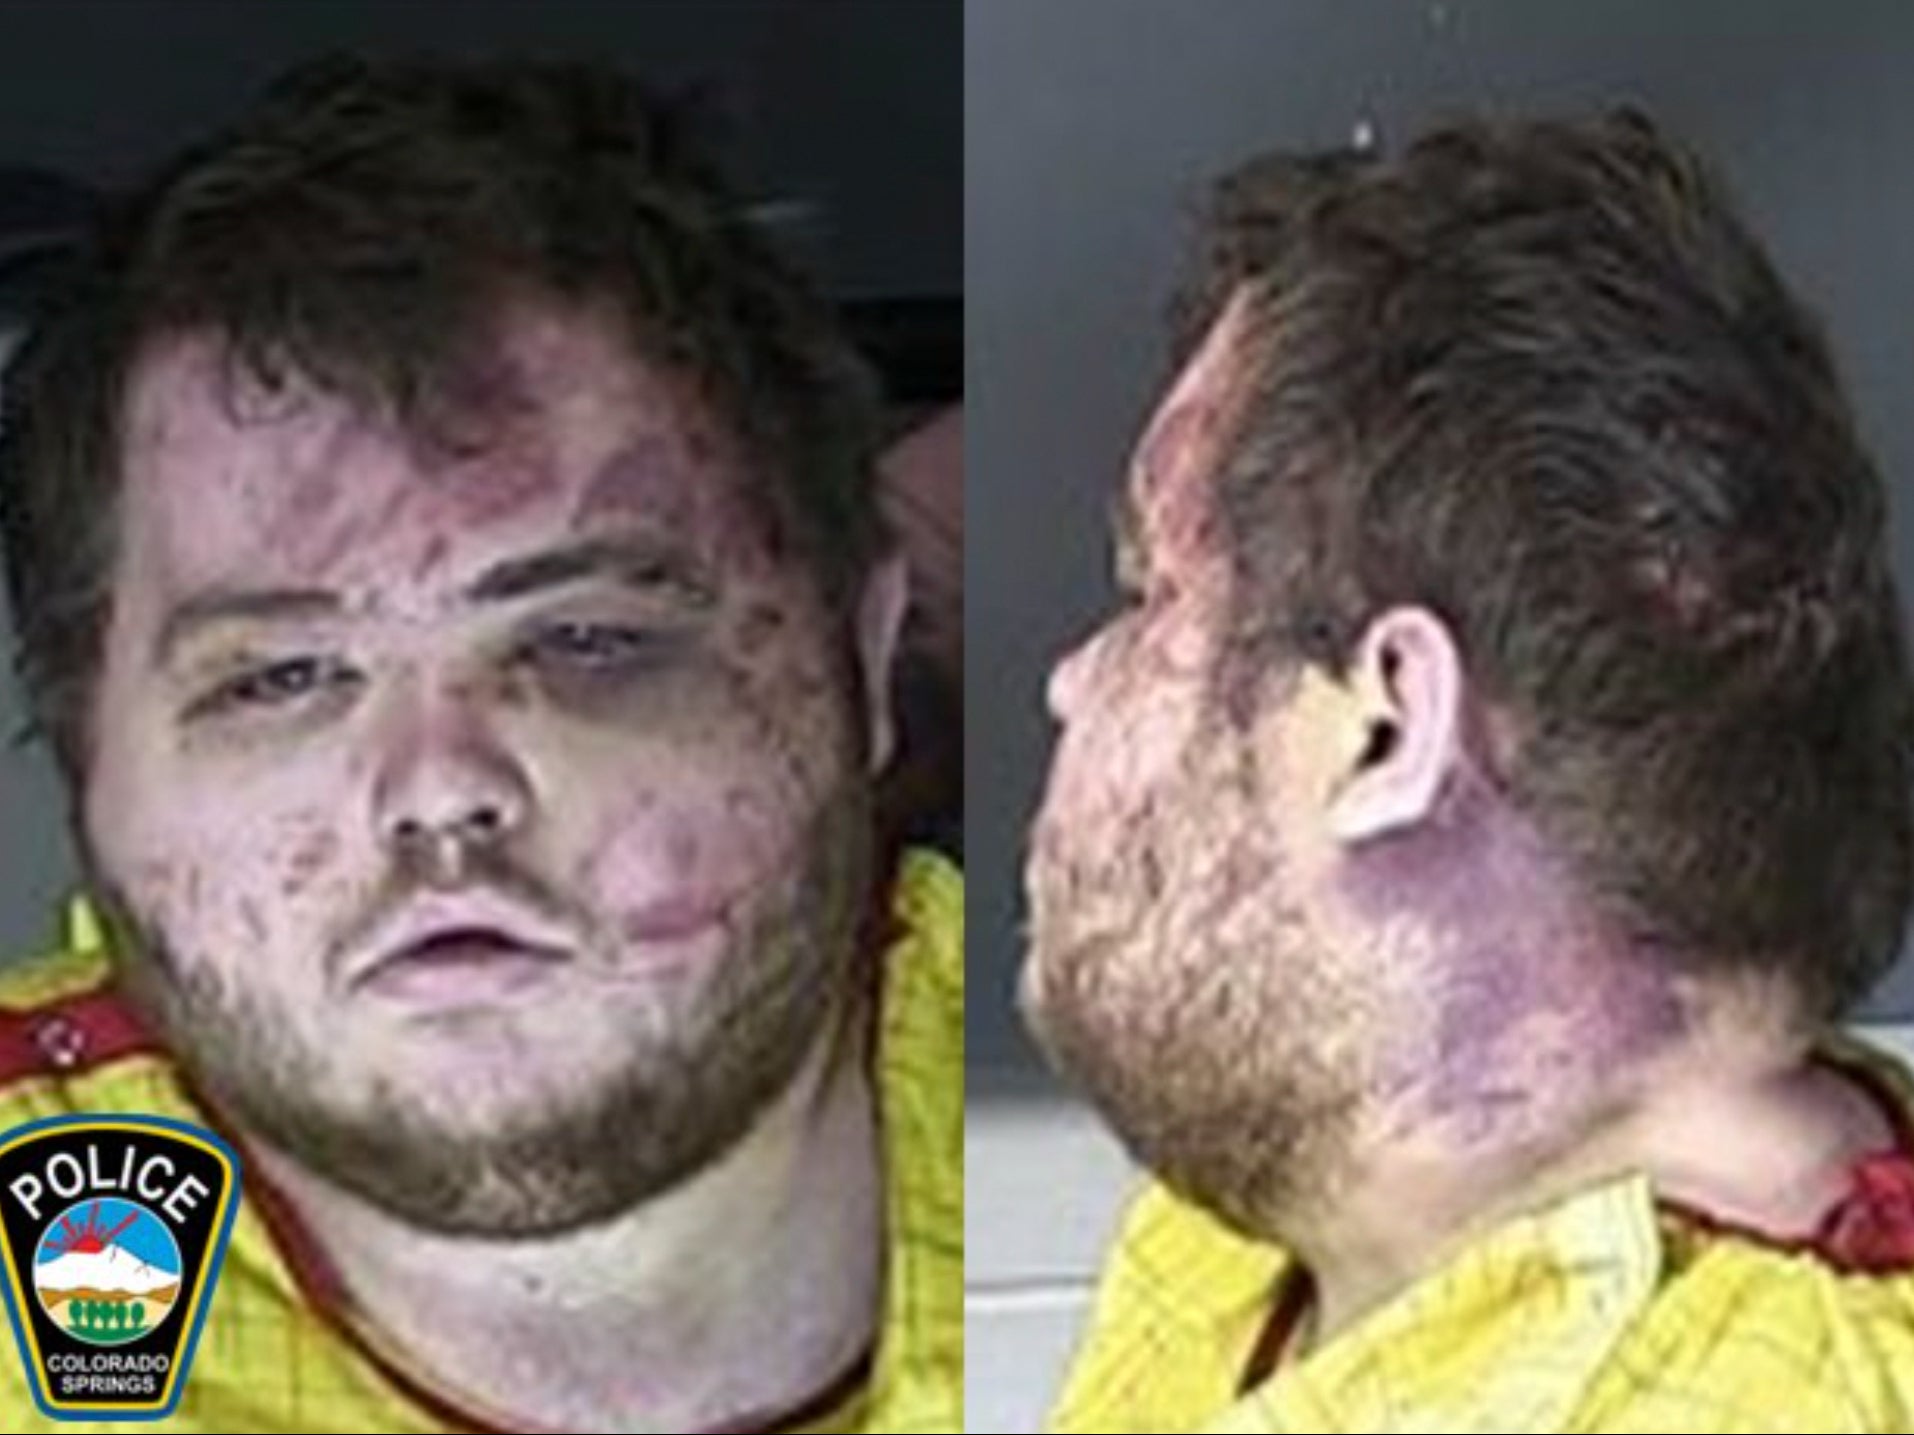 Booking photo of Anderson Lee Aldrich, suspect in the Colorado Springs nightclub mass shooting